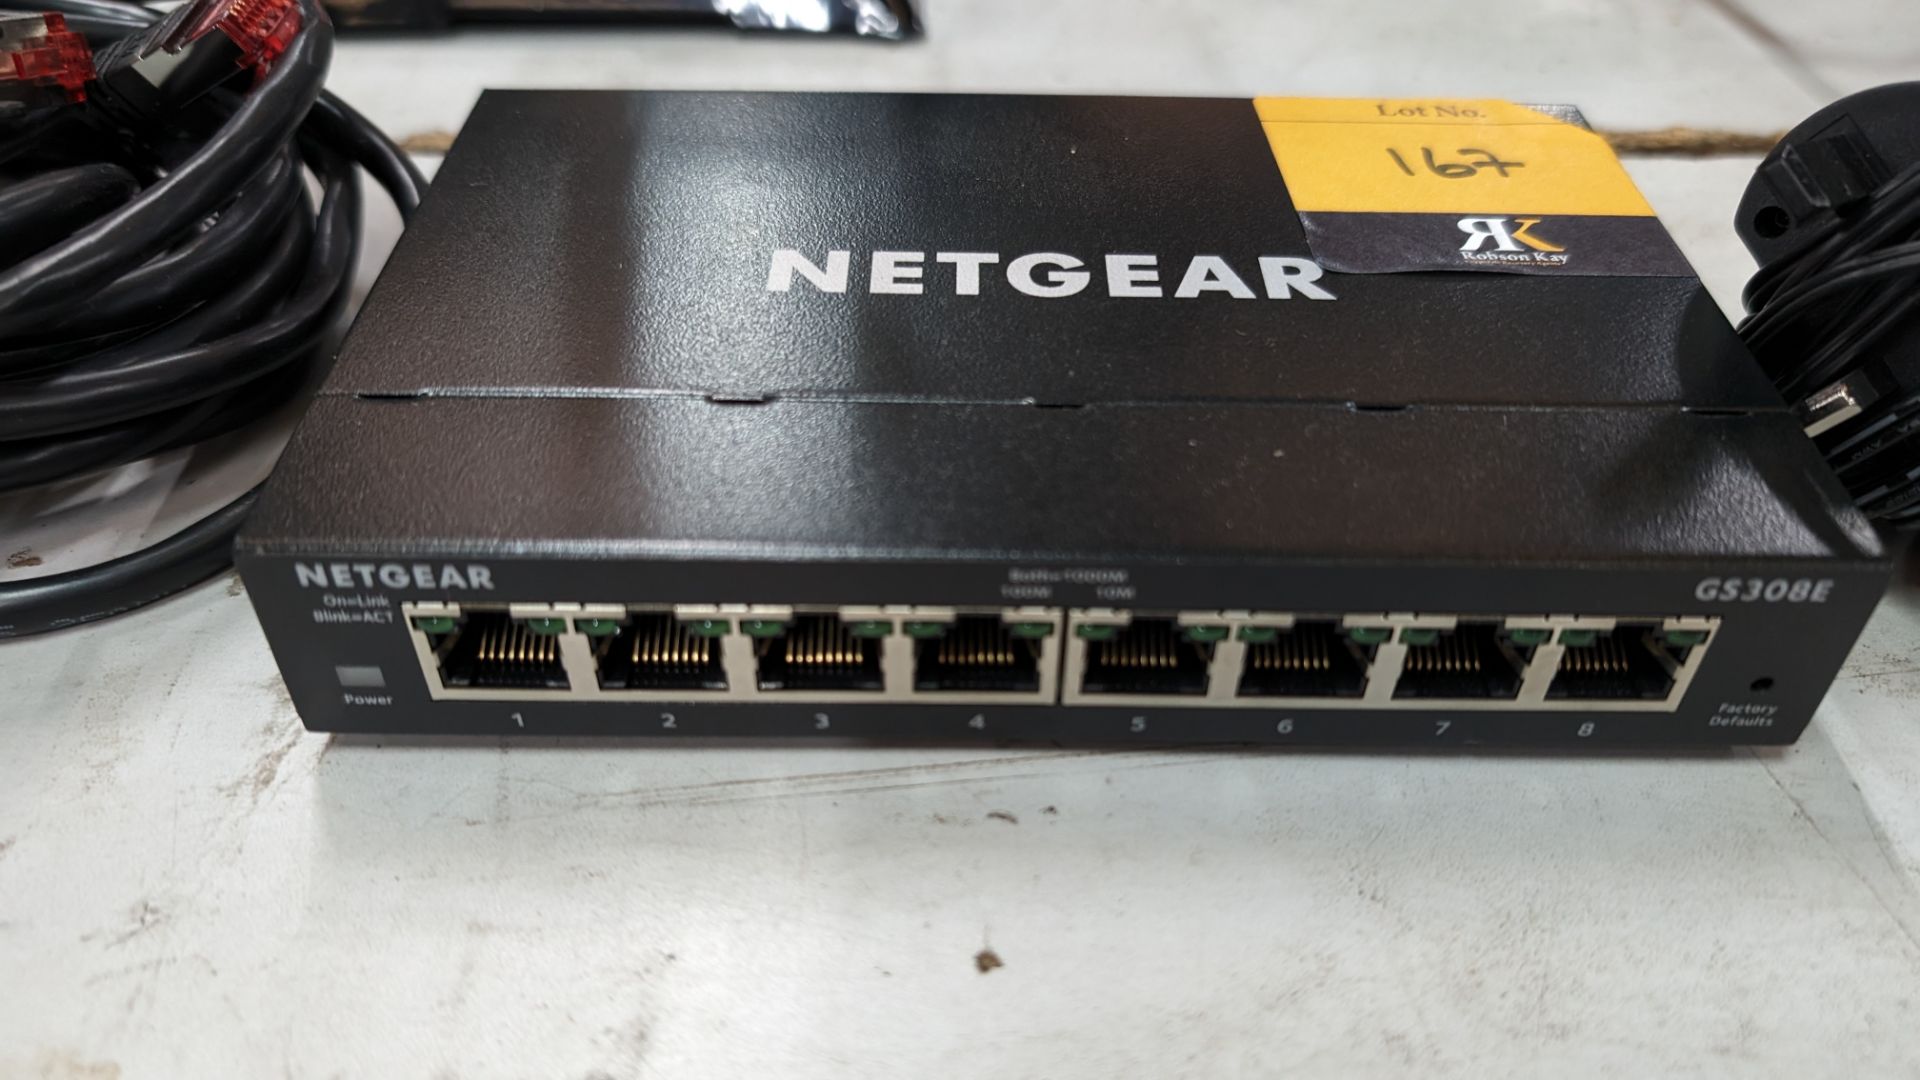 Netgear model GS308E 8 port switch including power pack - Image 4 of 7